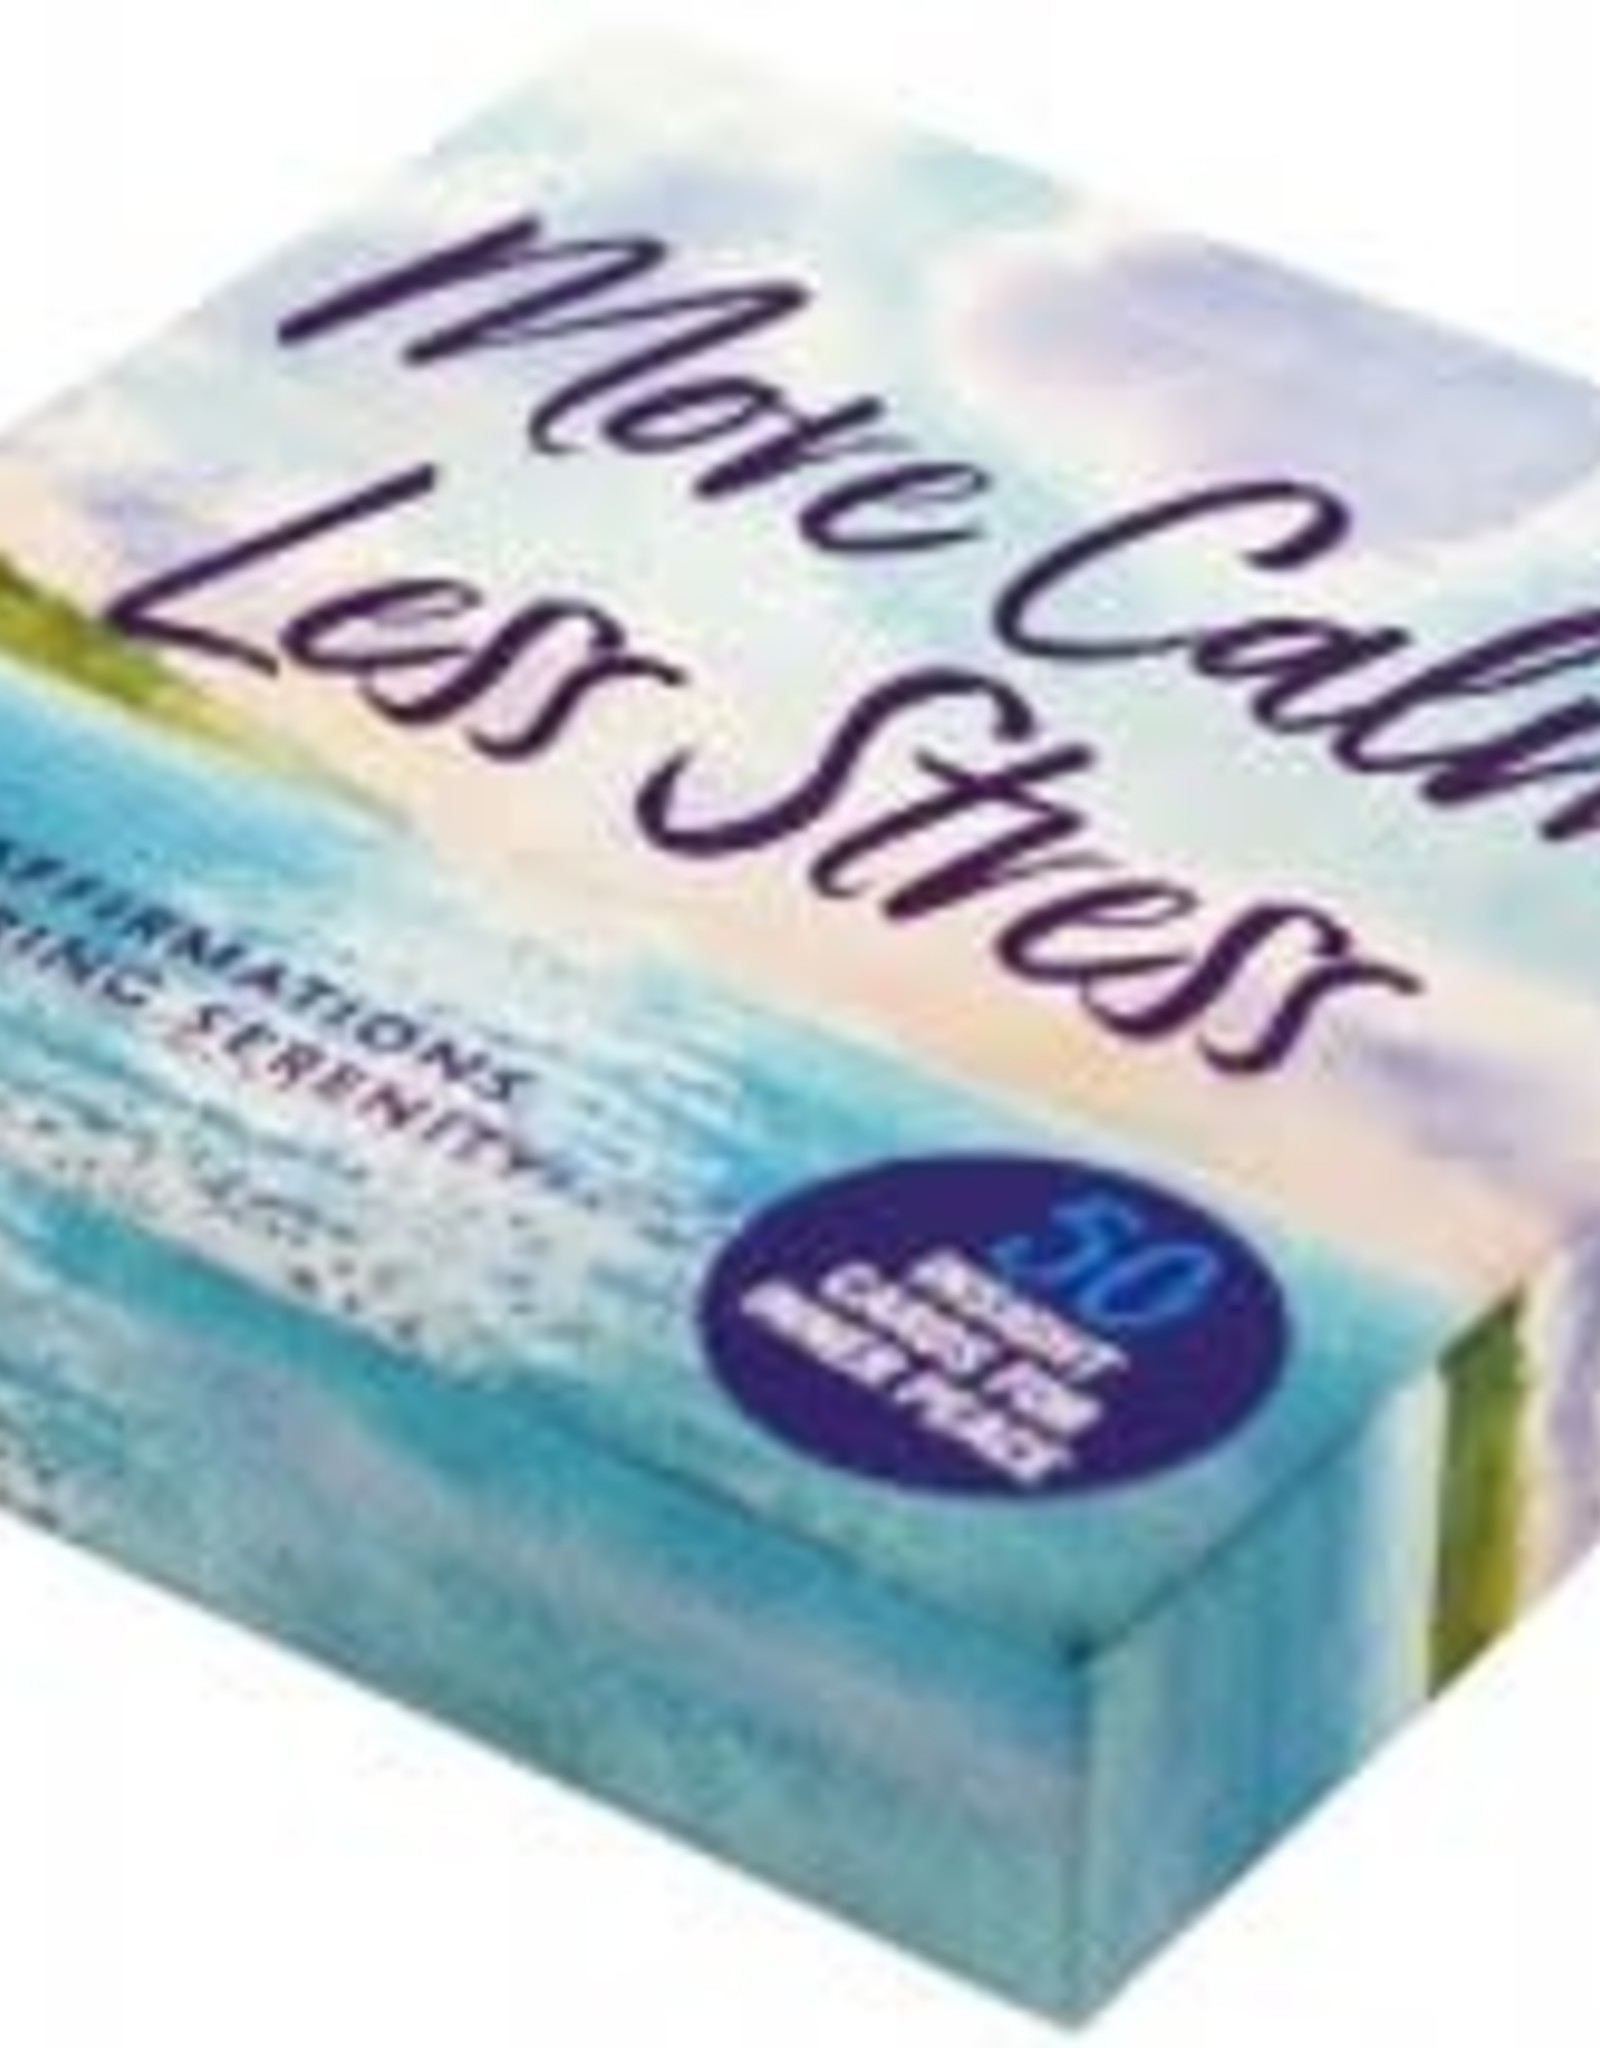 Peter Pauper Press Insight Cards - More Calm Less Stress